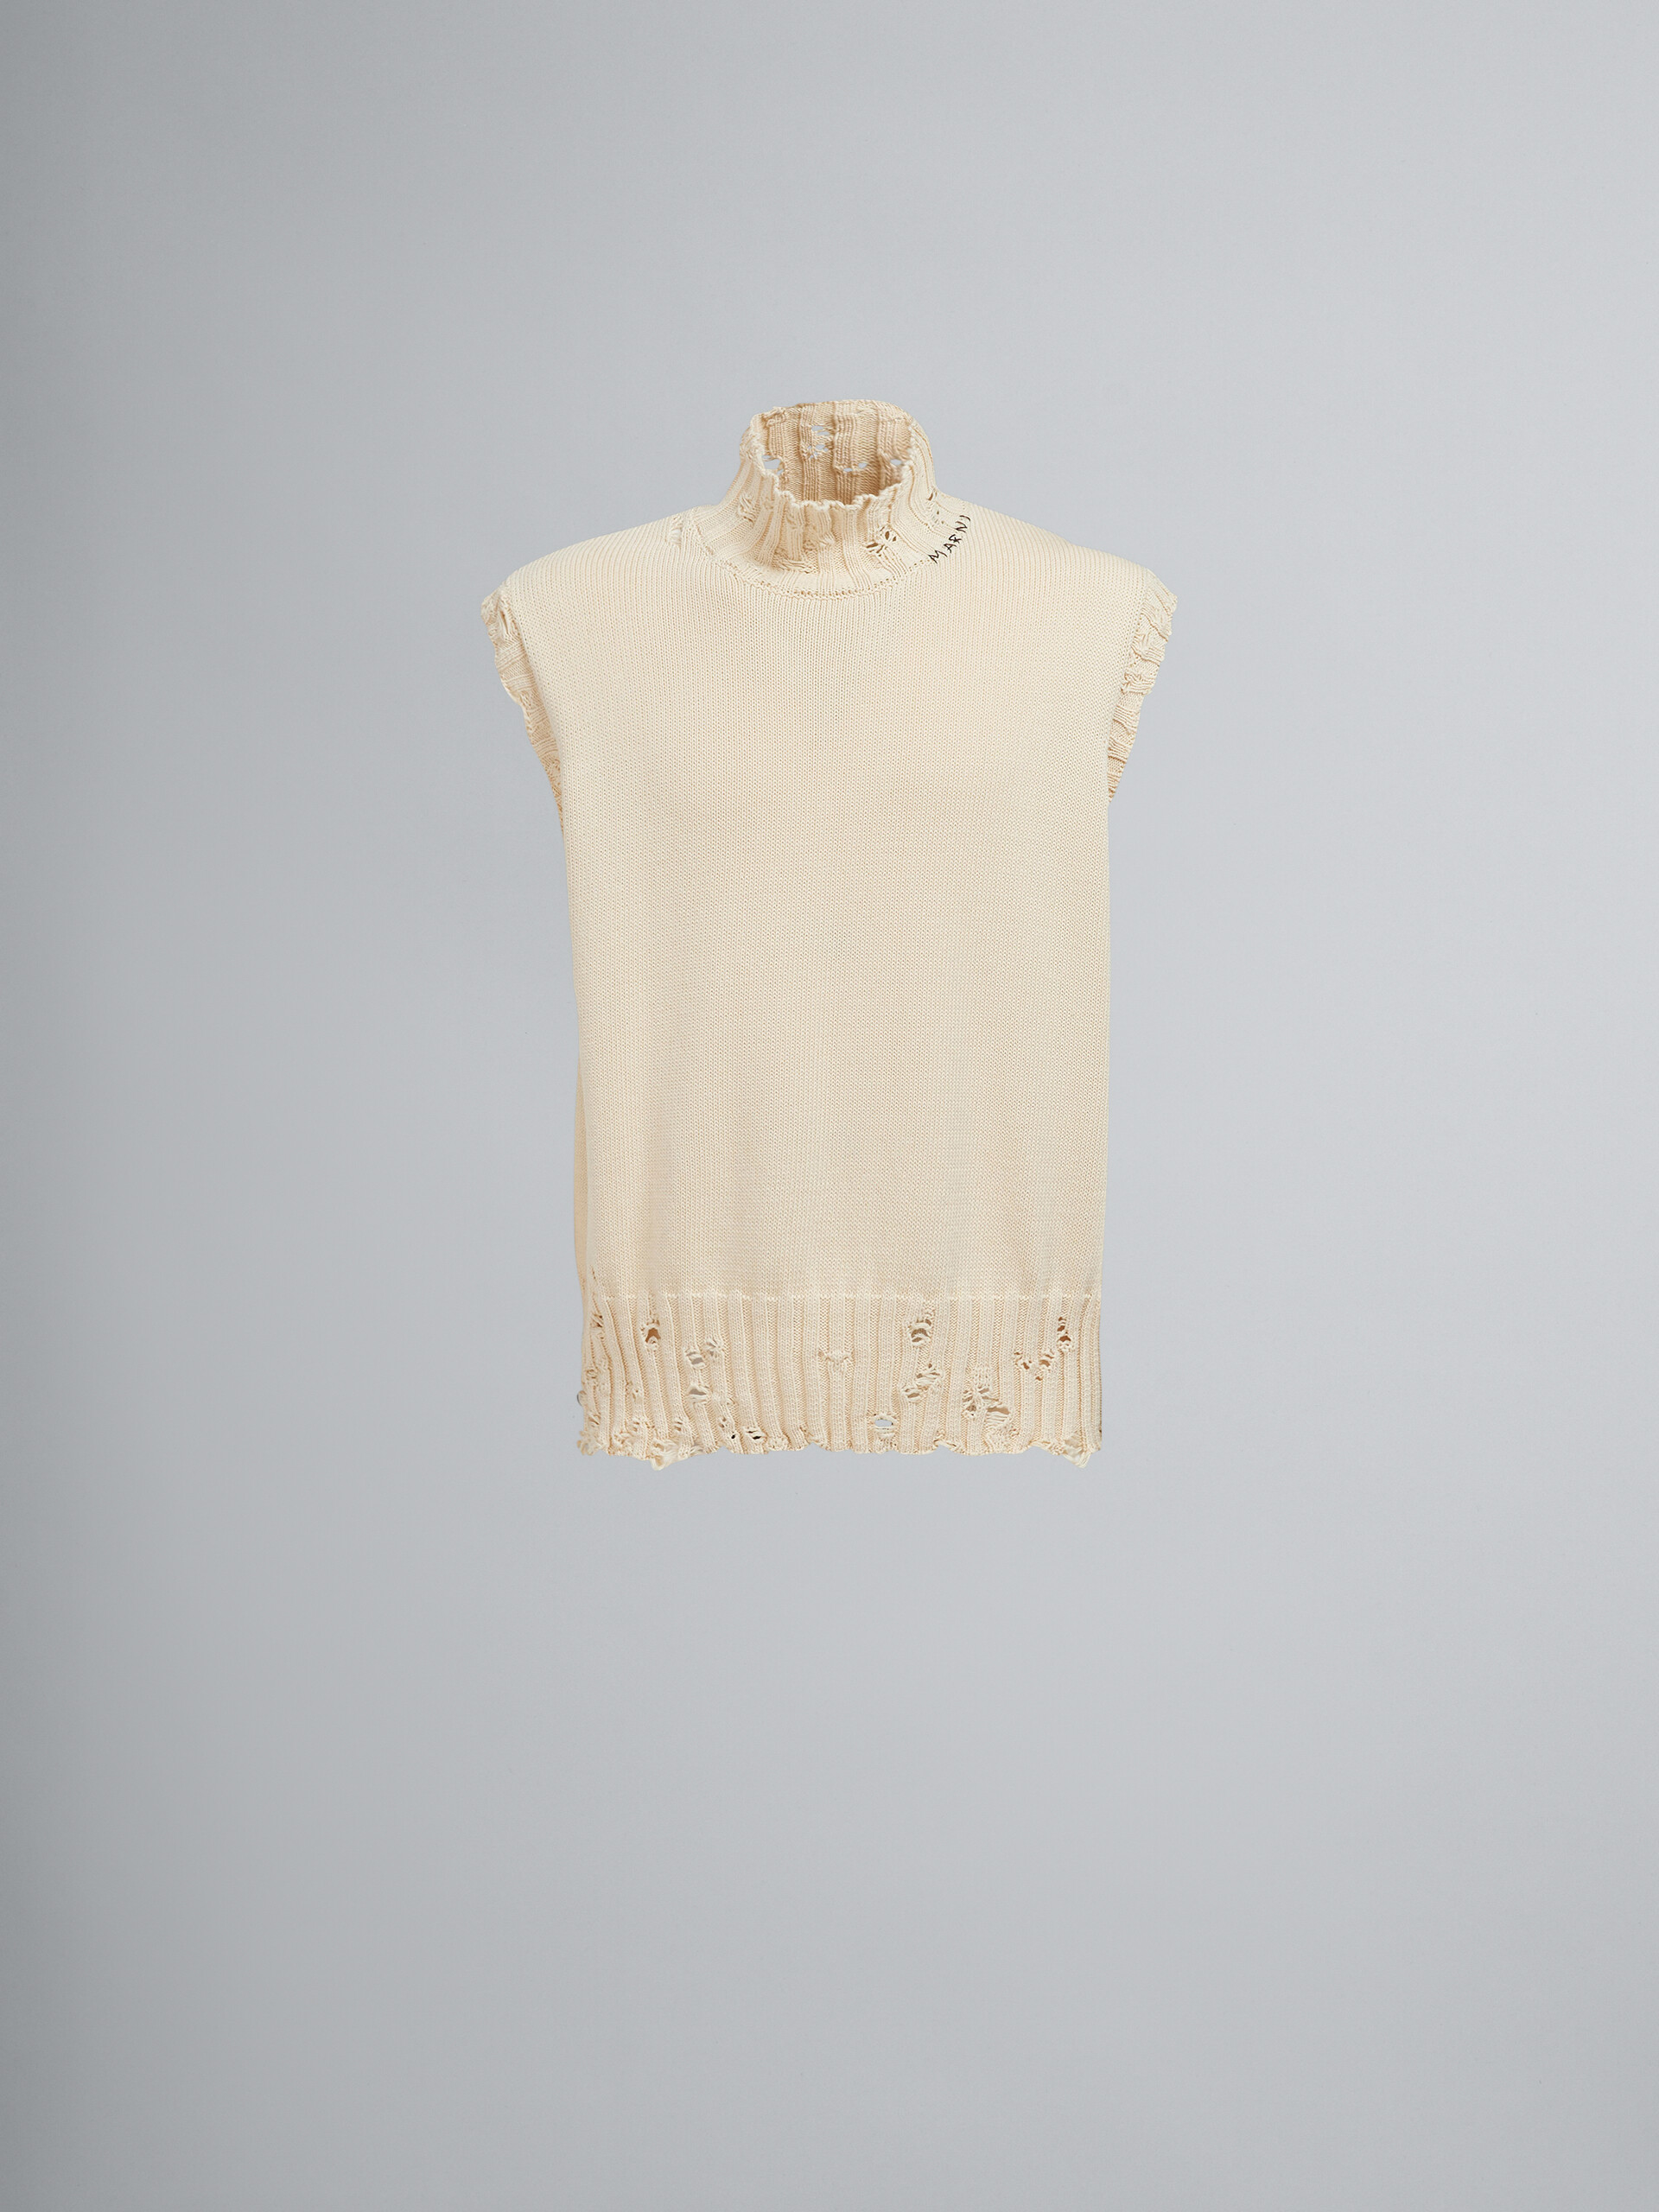 White cotton vest - Pullovers - Image 1